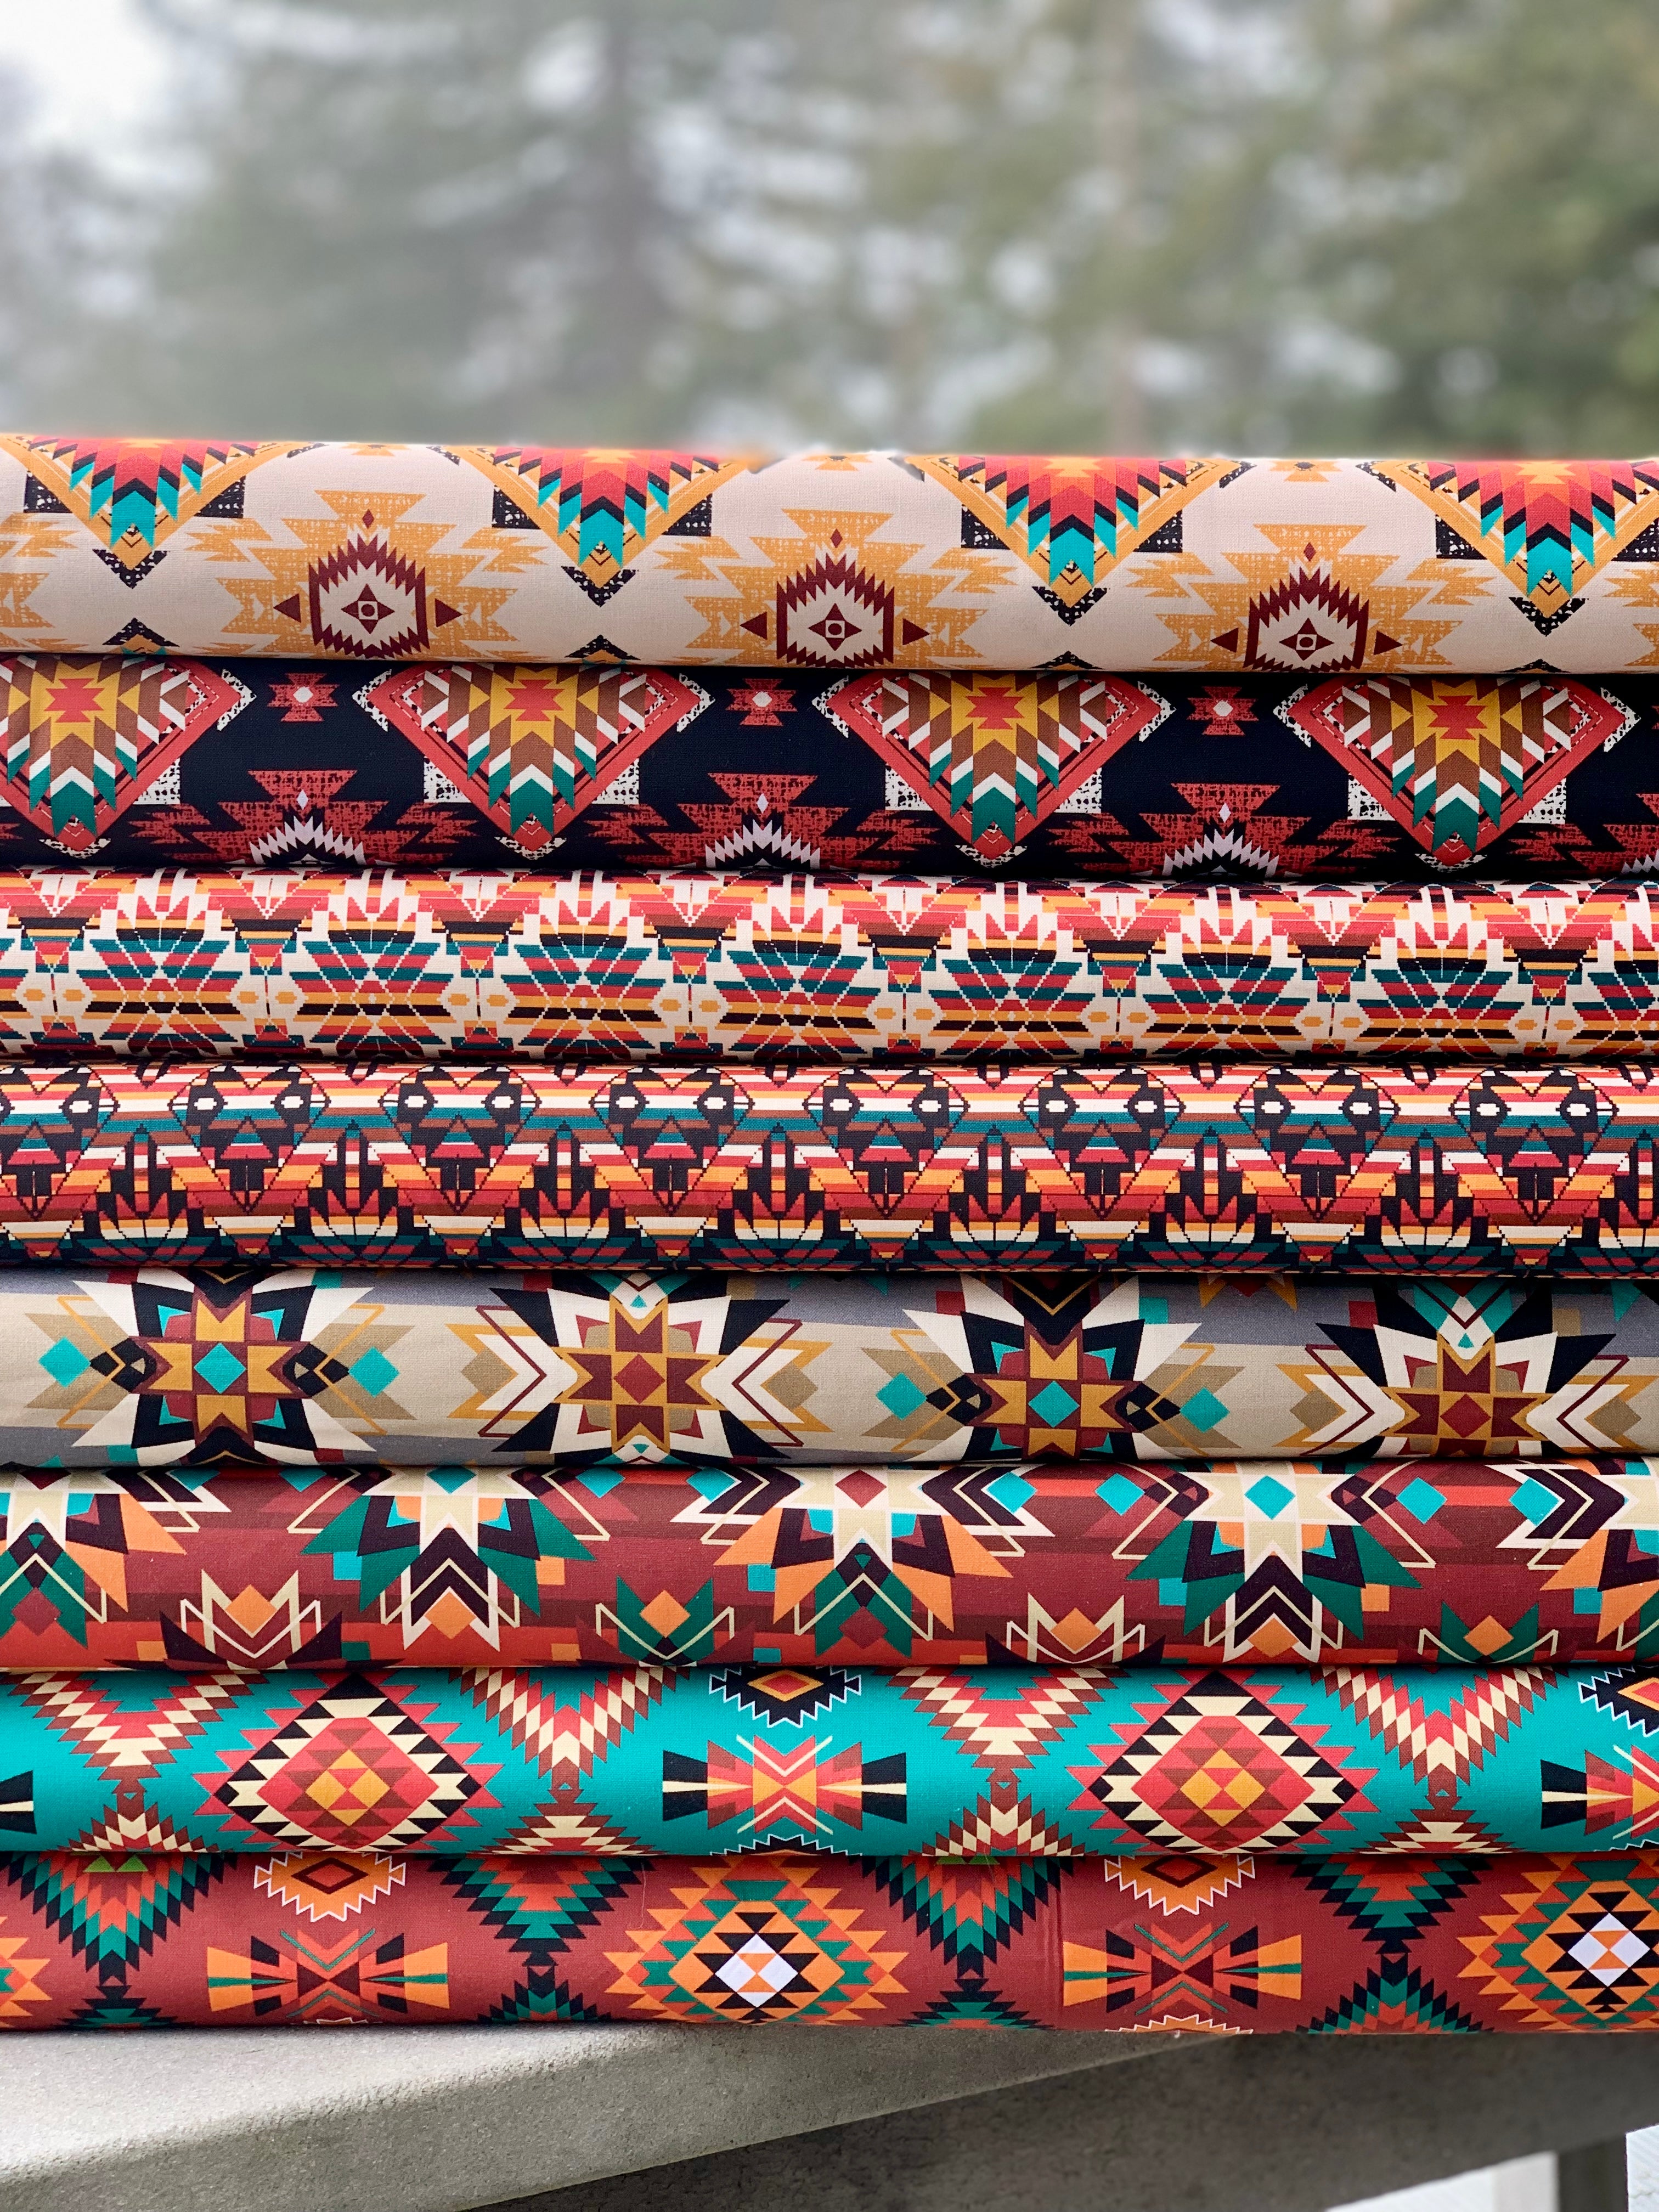 Tribal Cultural Southwest Native Fabric - 56 Black